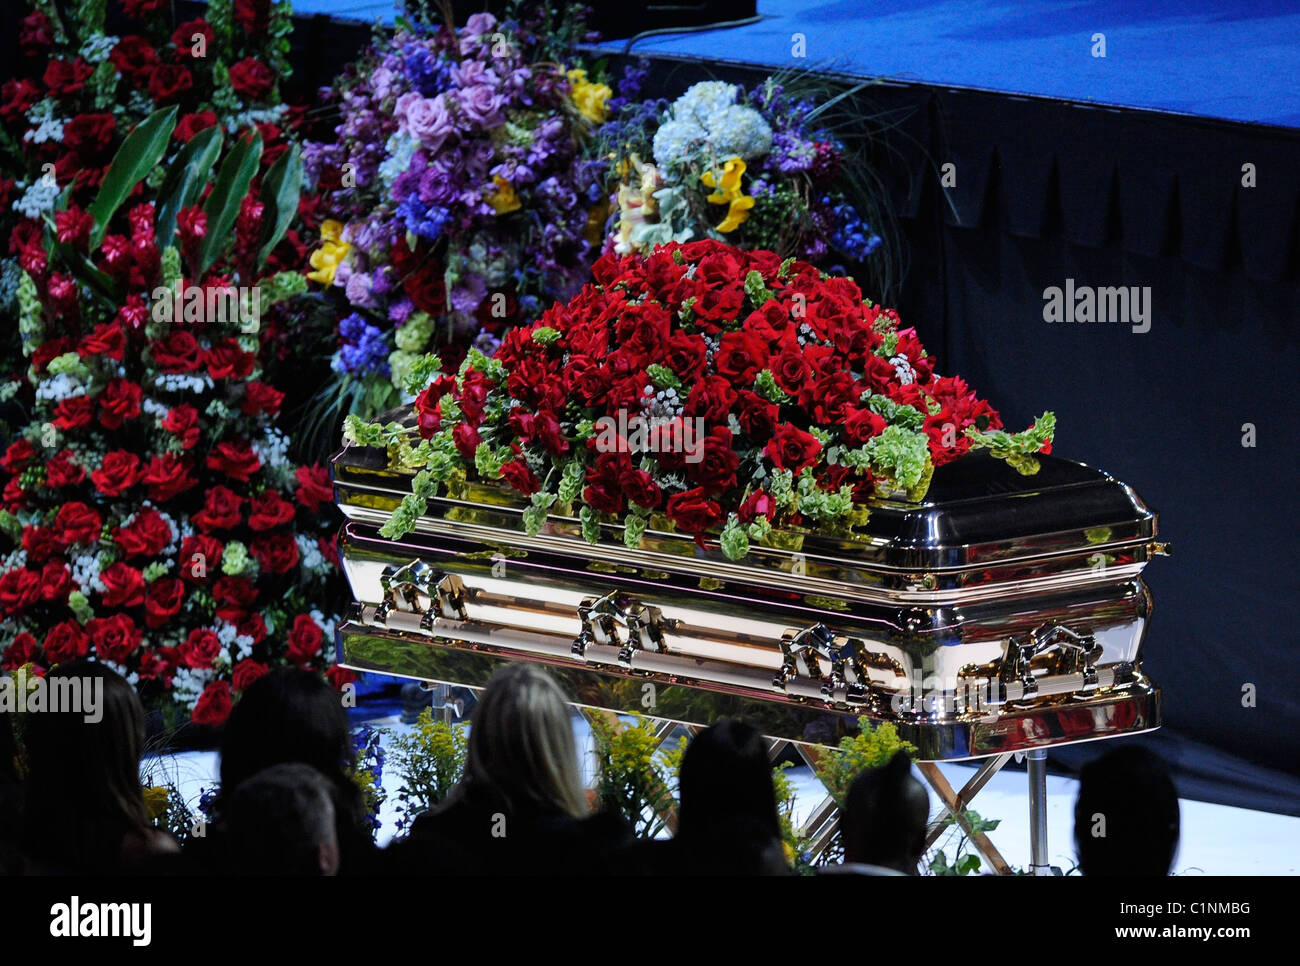 Michael Jackson Funeral Pictures Open Casket